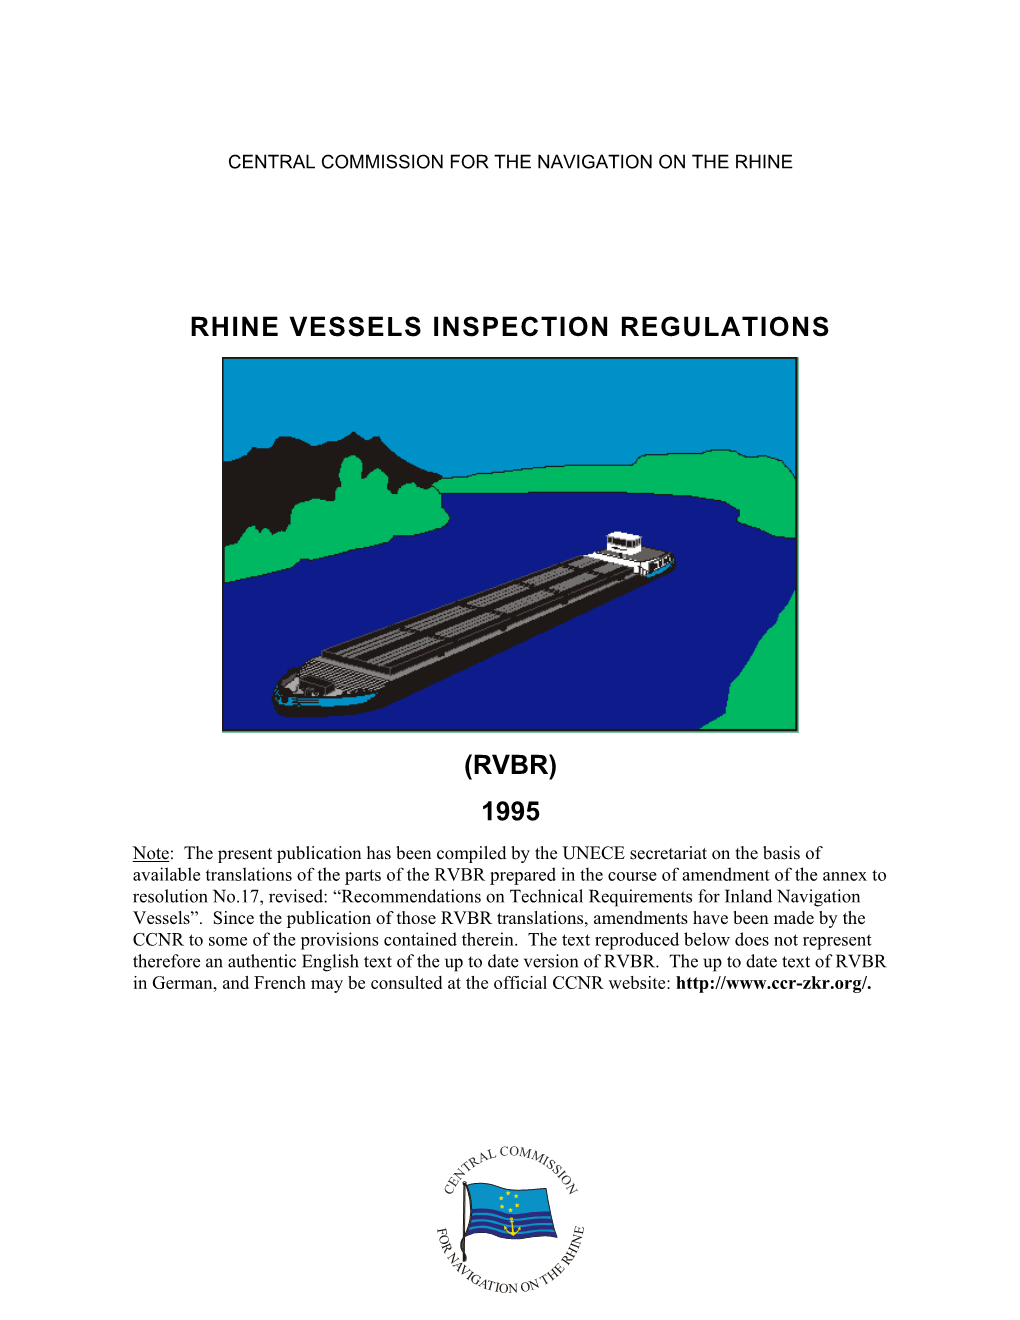 Rhine Vessels Inspection Regulations (Rvbr)